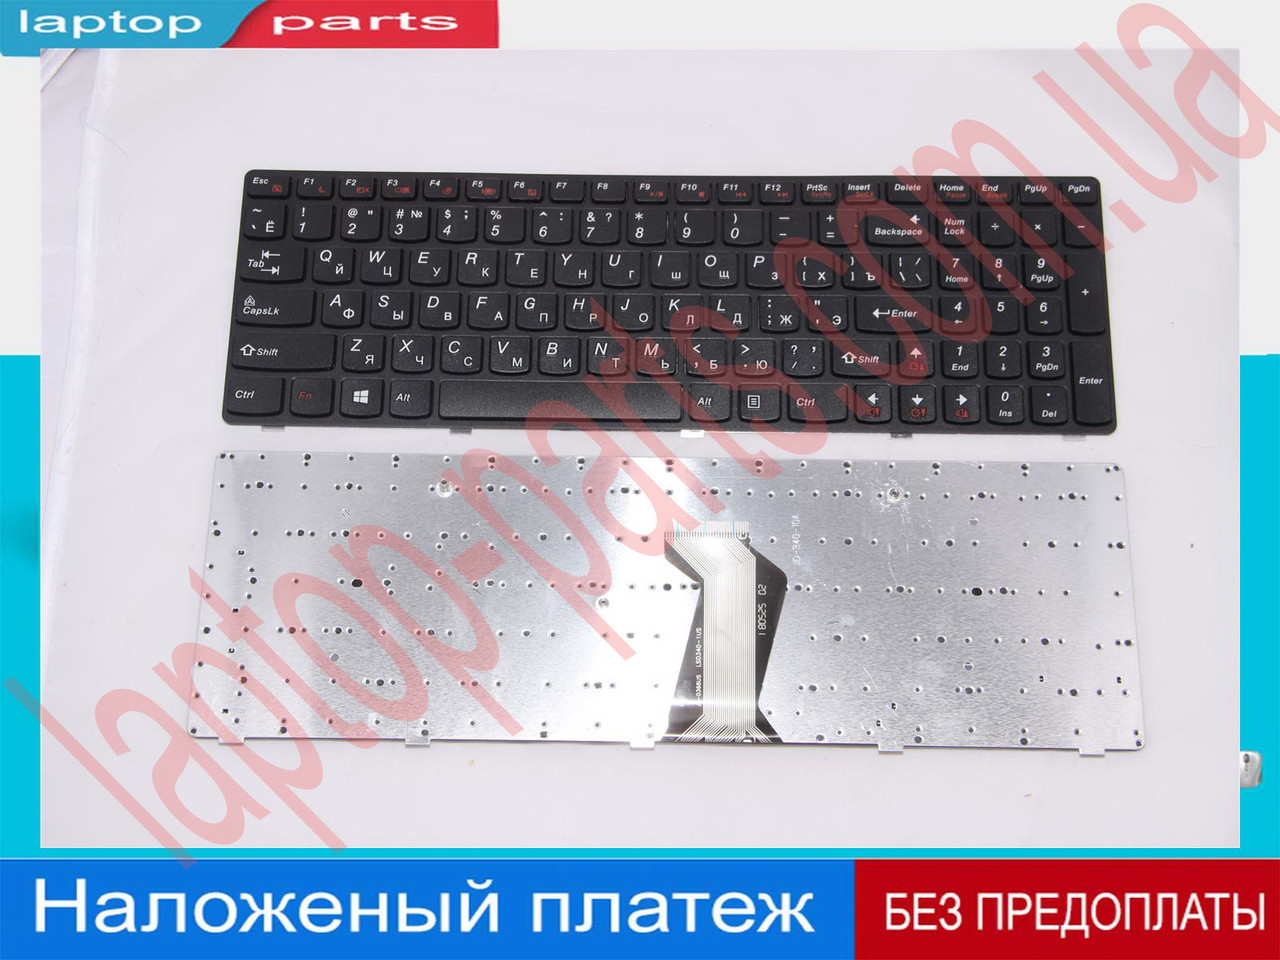 Ноутбук Леново G500 Цена Украина